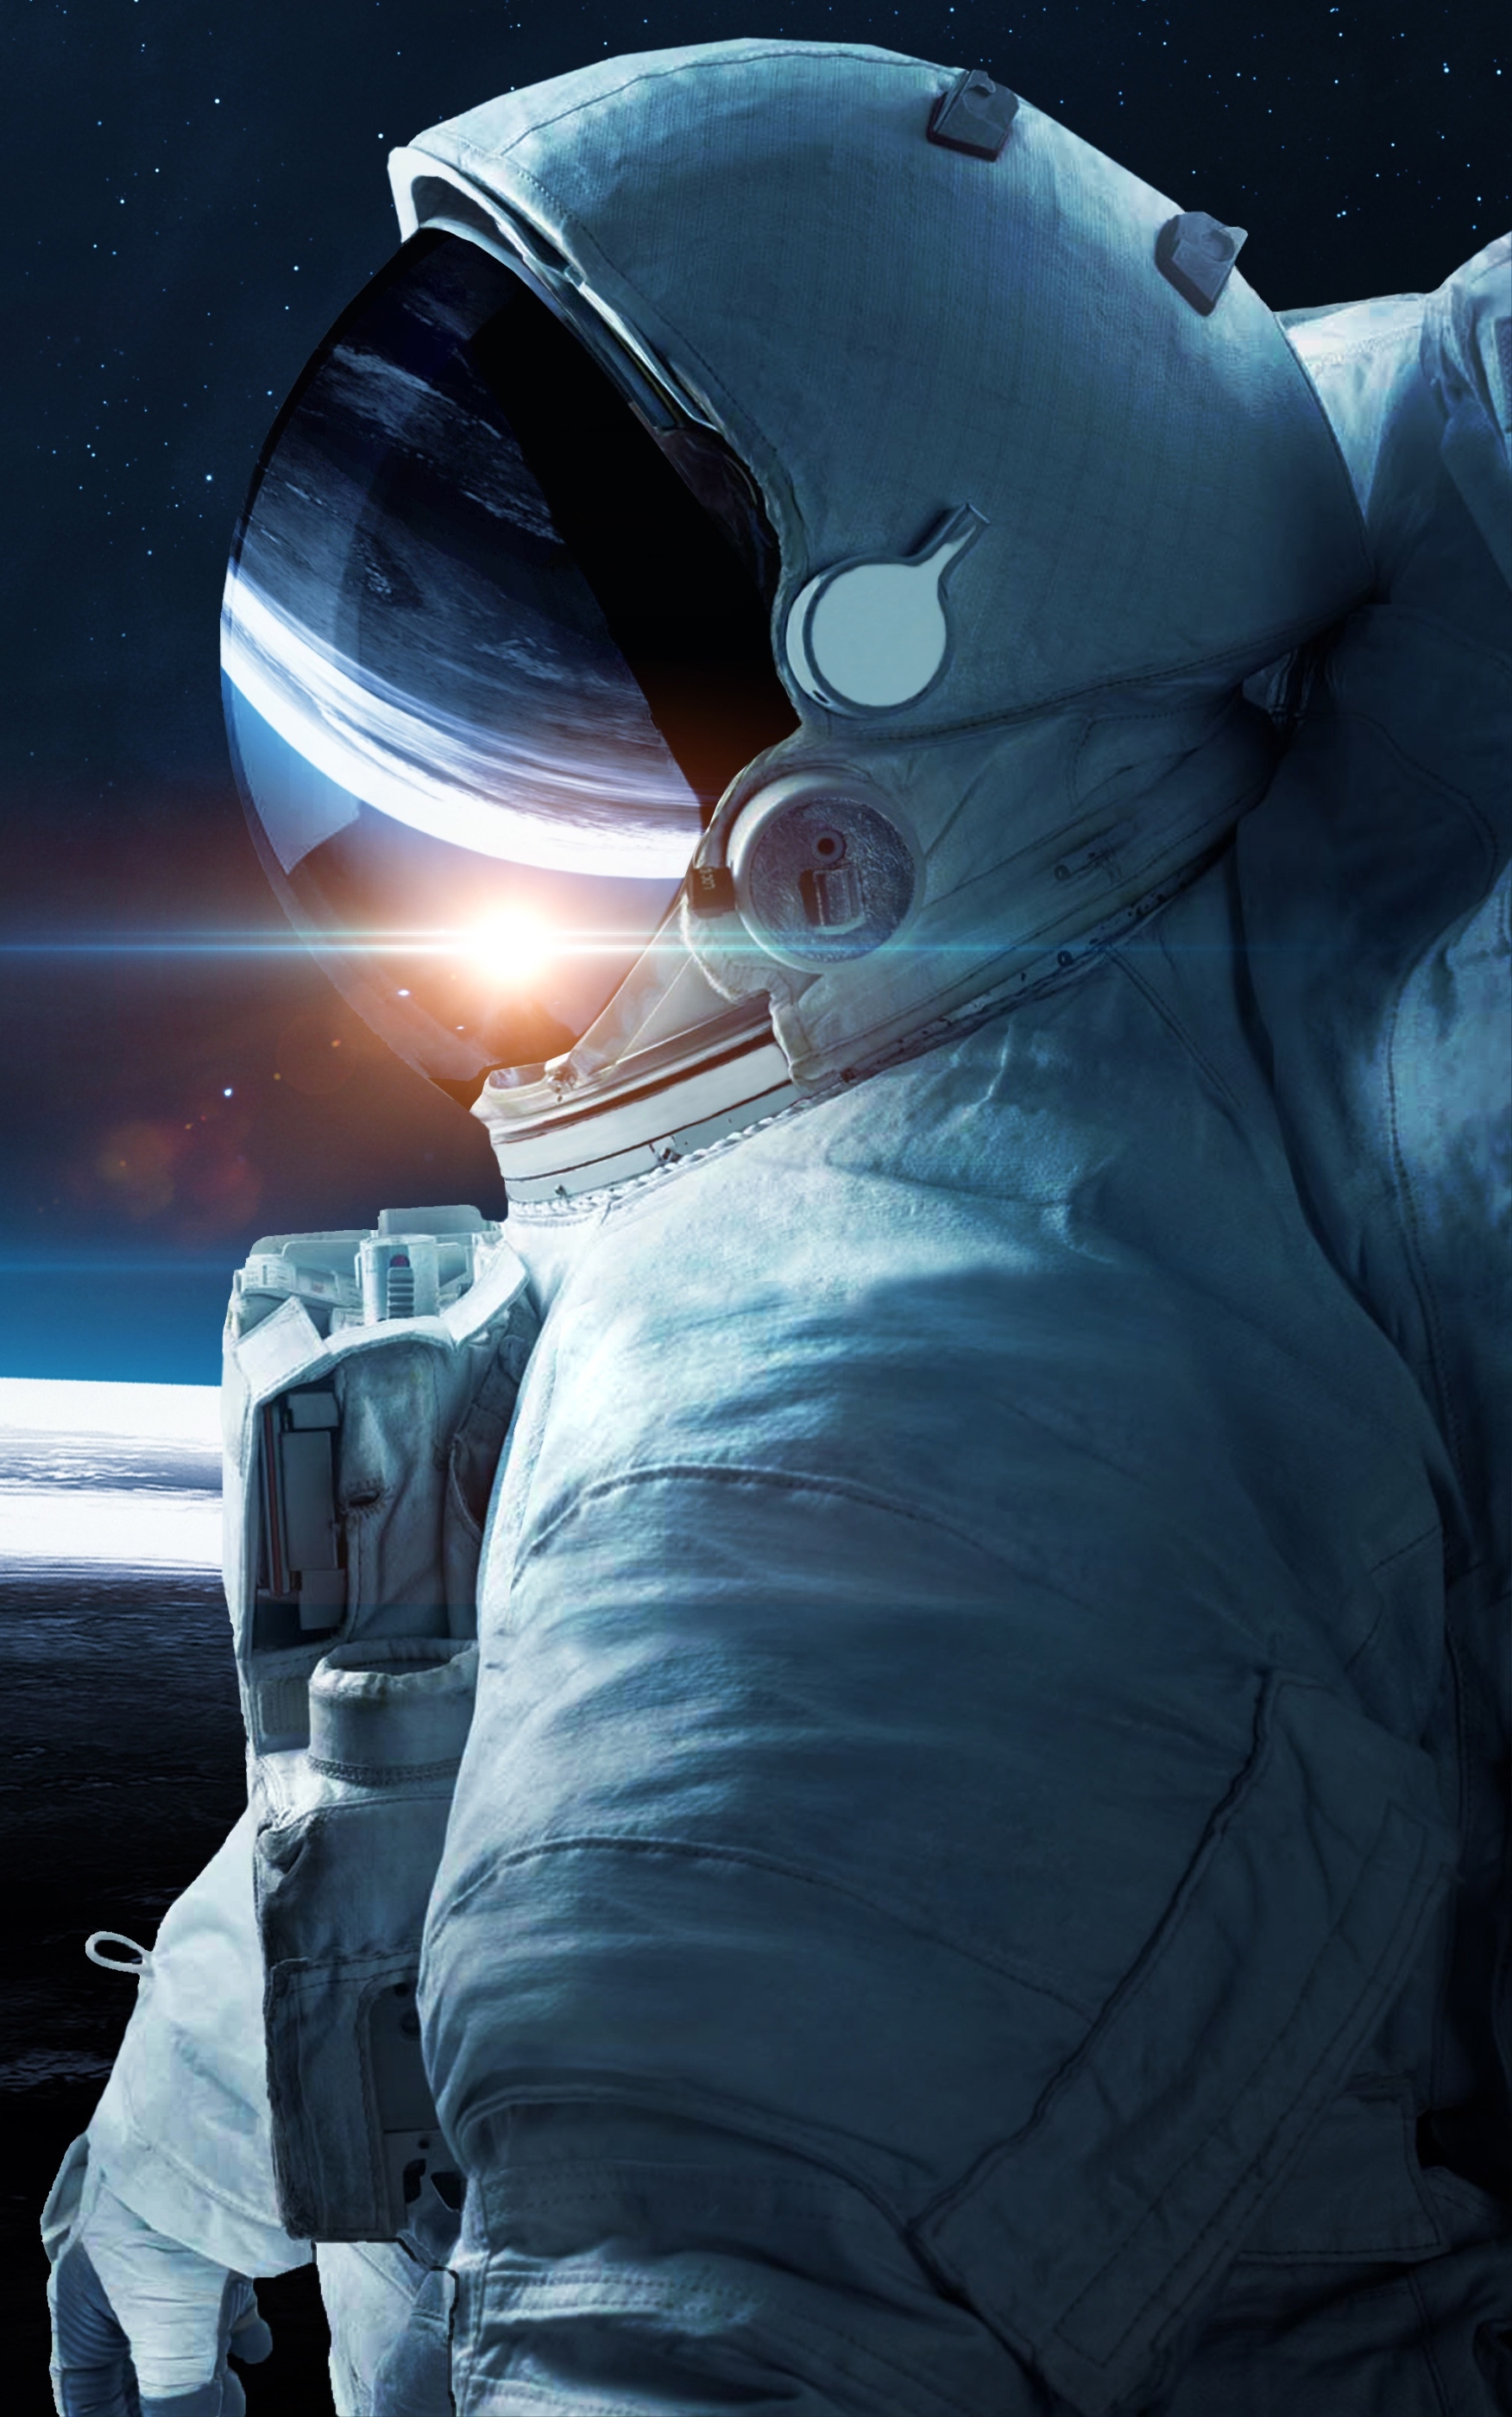  Astronaut Cellphone FHD pic